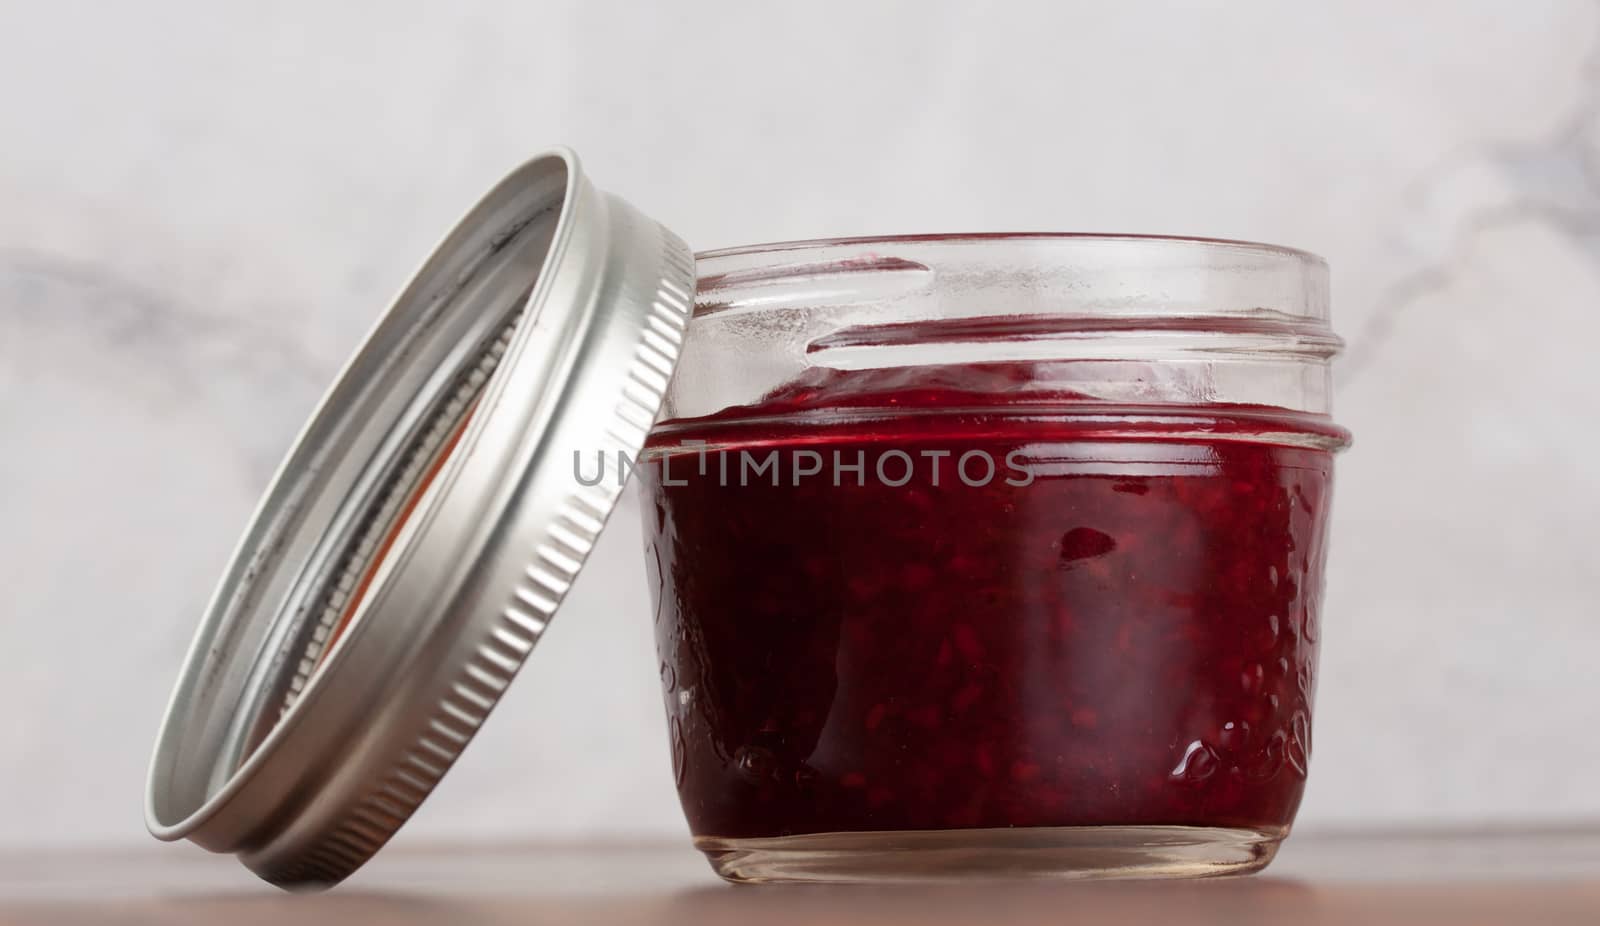 Homemade raspberry jam in a reusable glass jar by lanalanglois